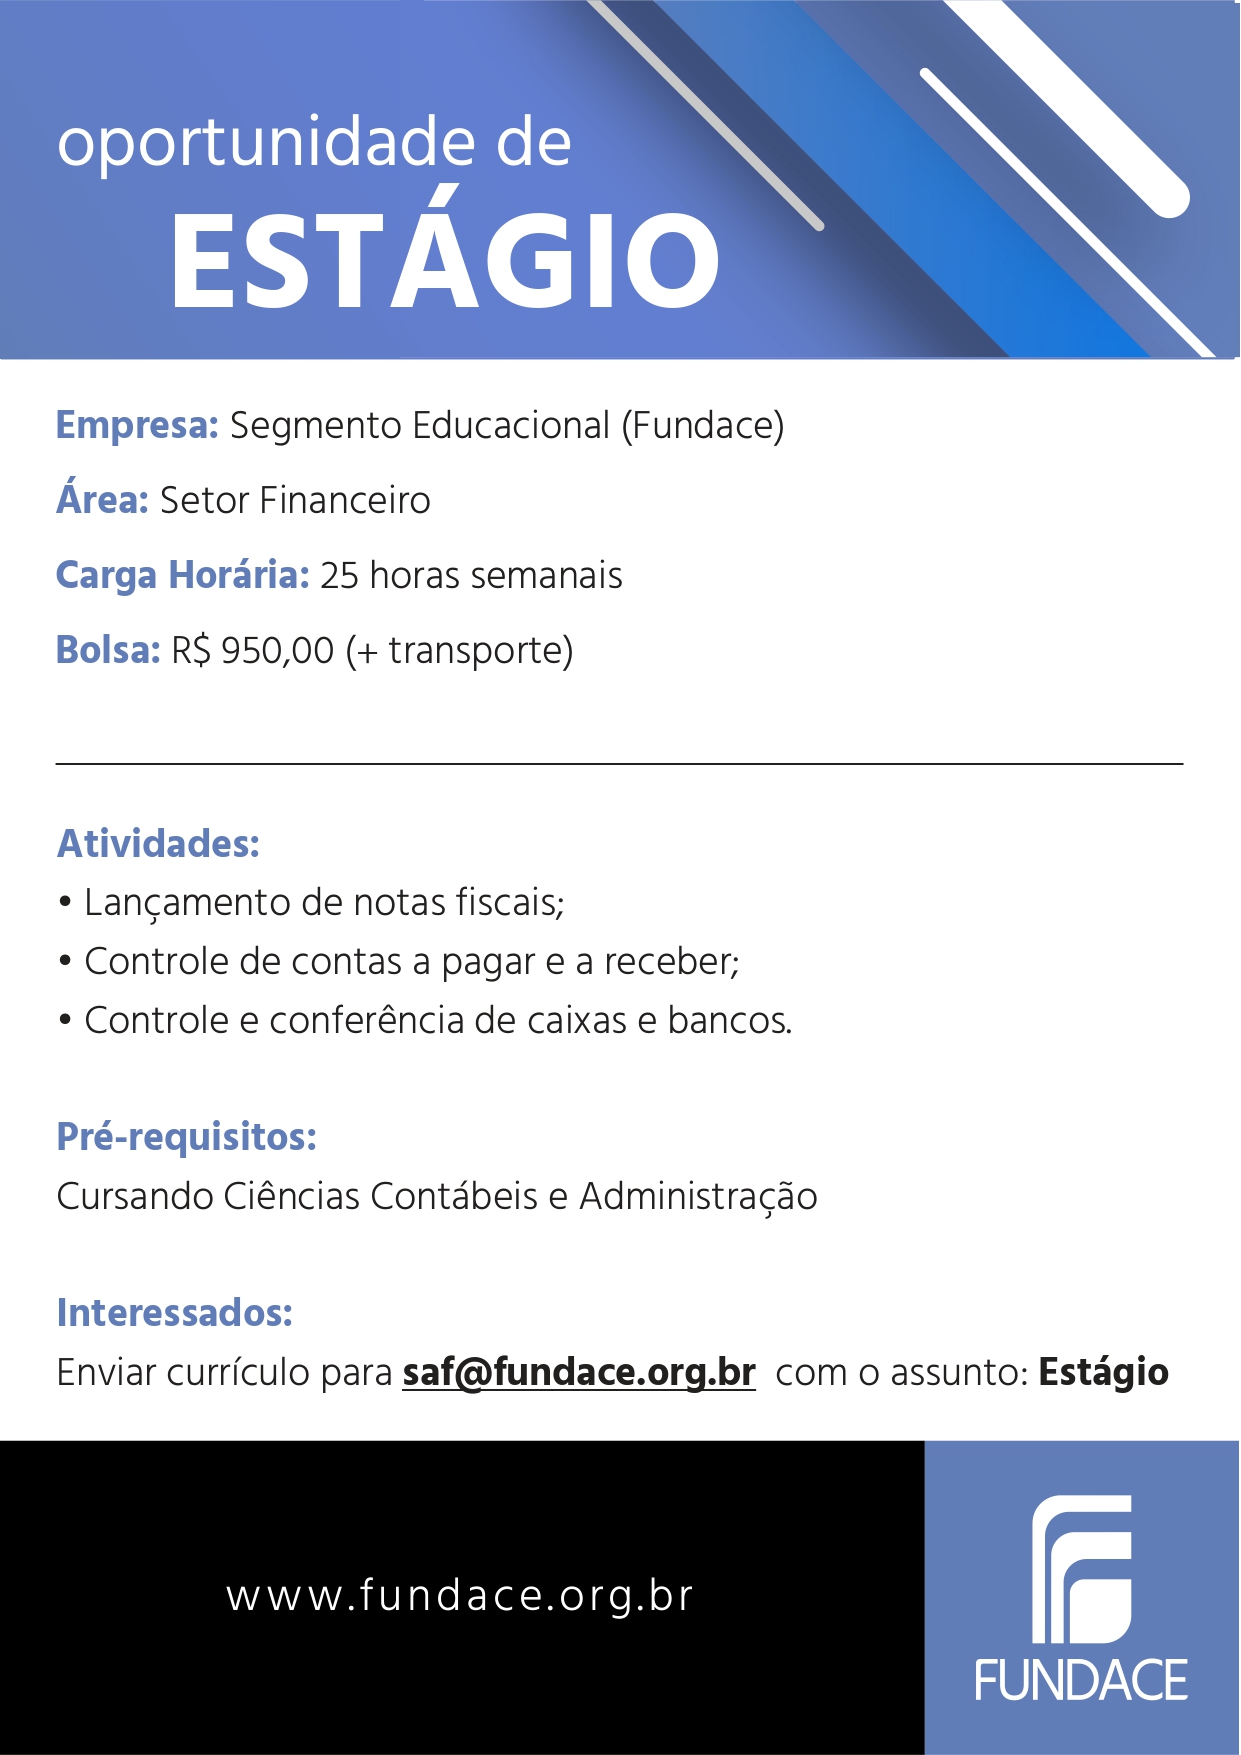 Fundace_-_Financeiro-1_page-0001.jpg